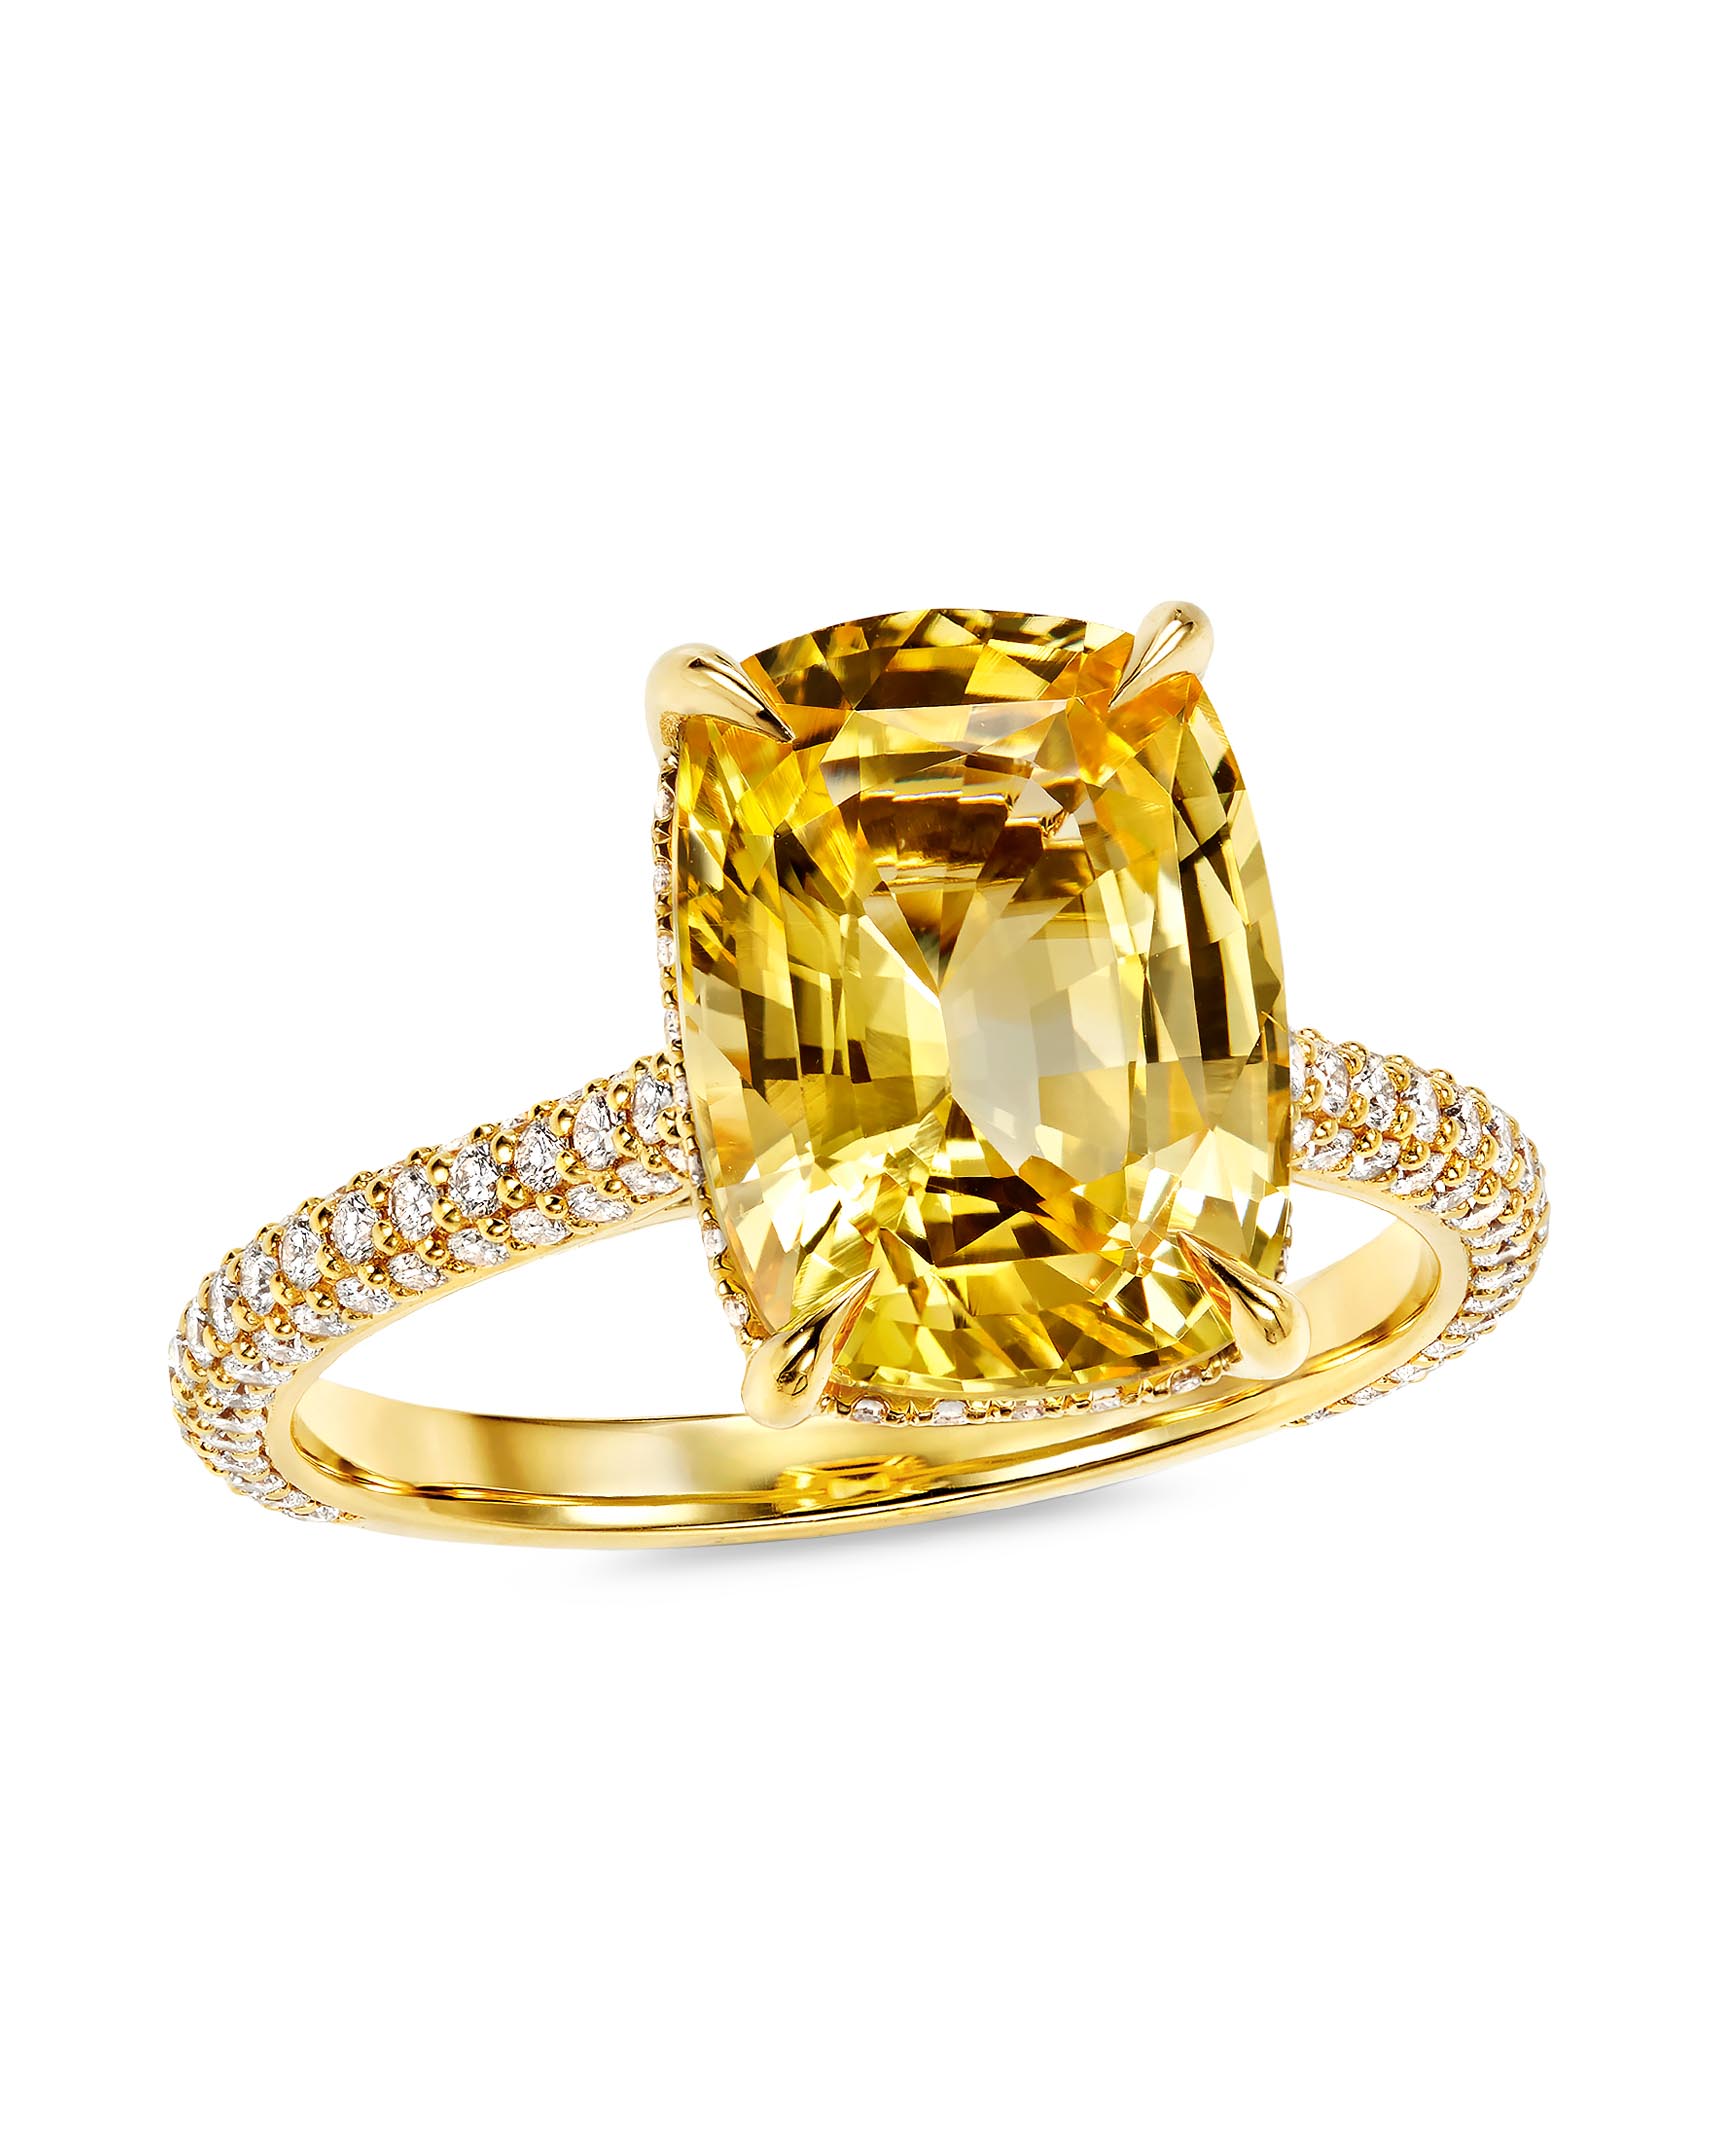 Cushion Cut Yellow Sapphire Ring for Men in Gold | SayaBling Jewelry